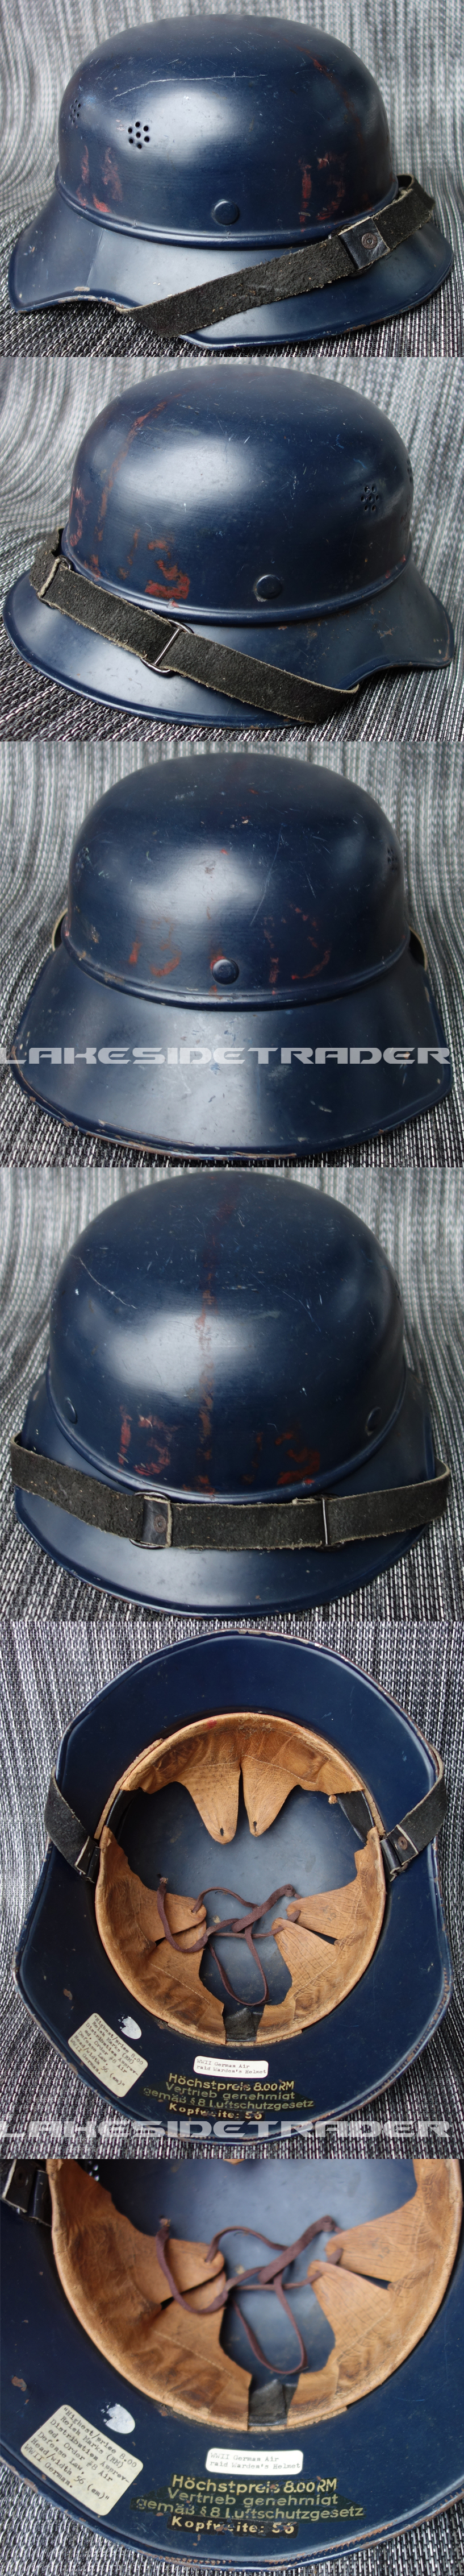 M38 Luftshutz Helmet